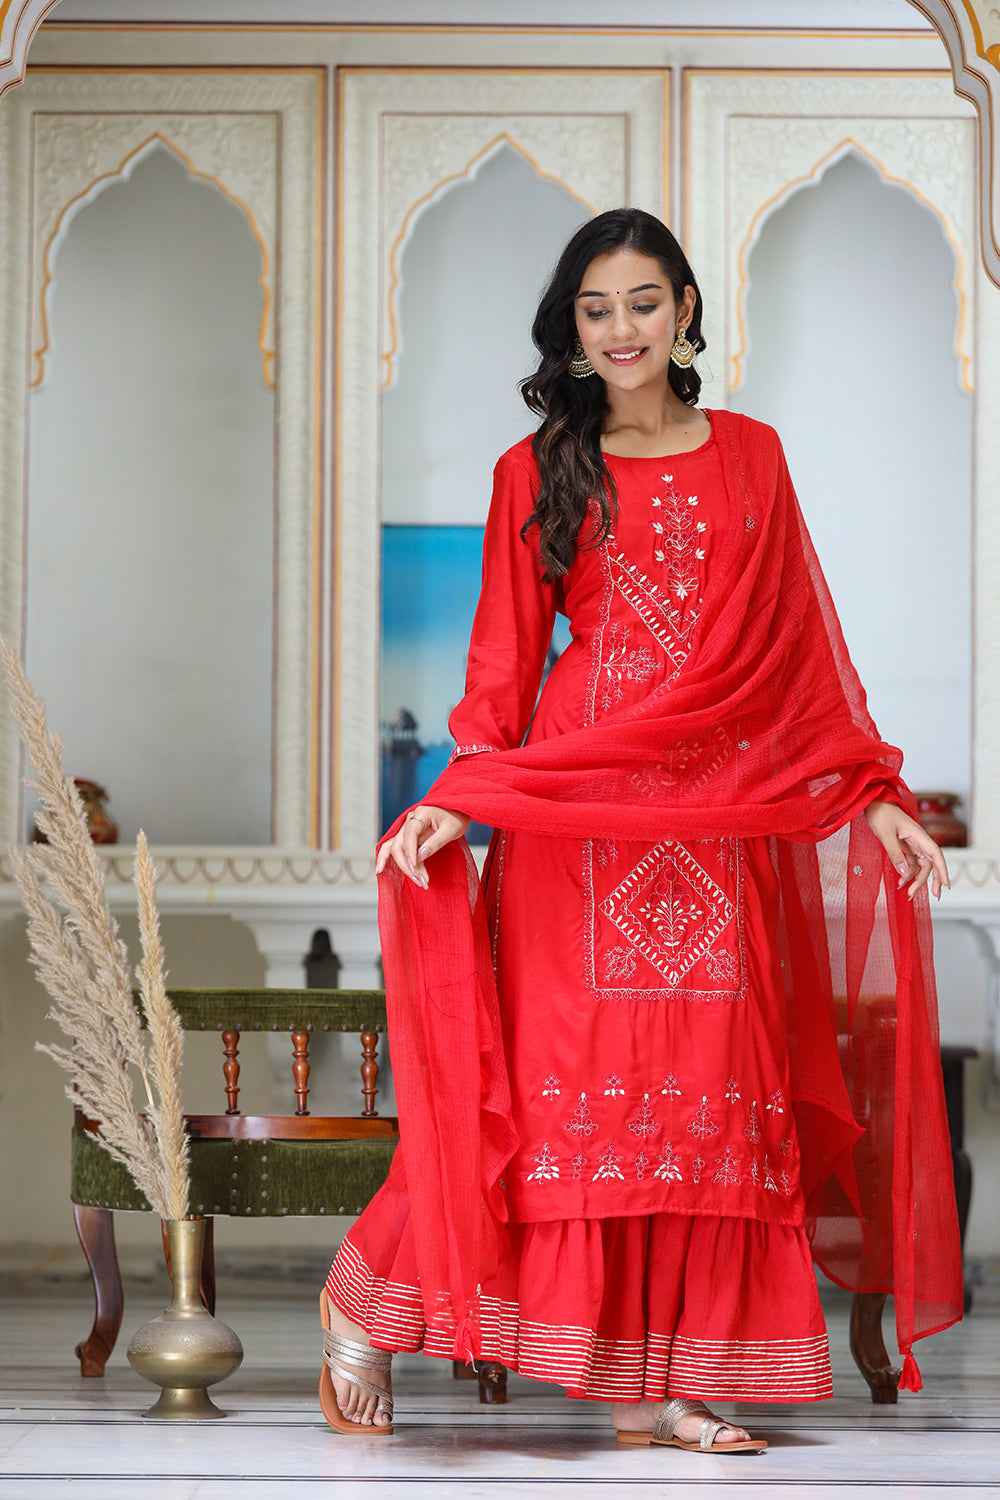 Buy Red Sharara Dress for weddings